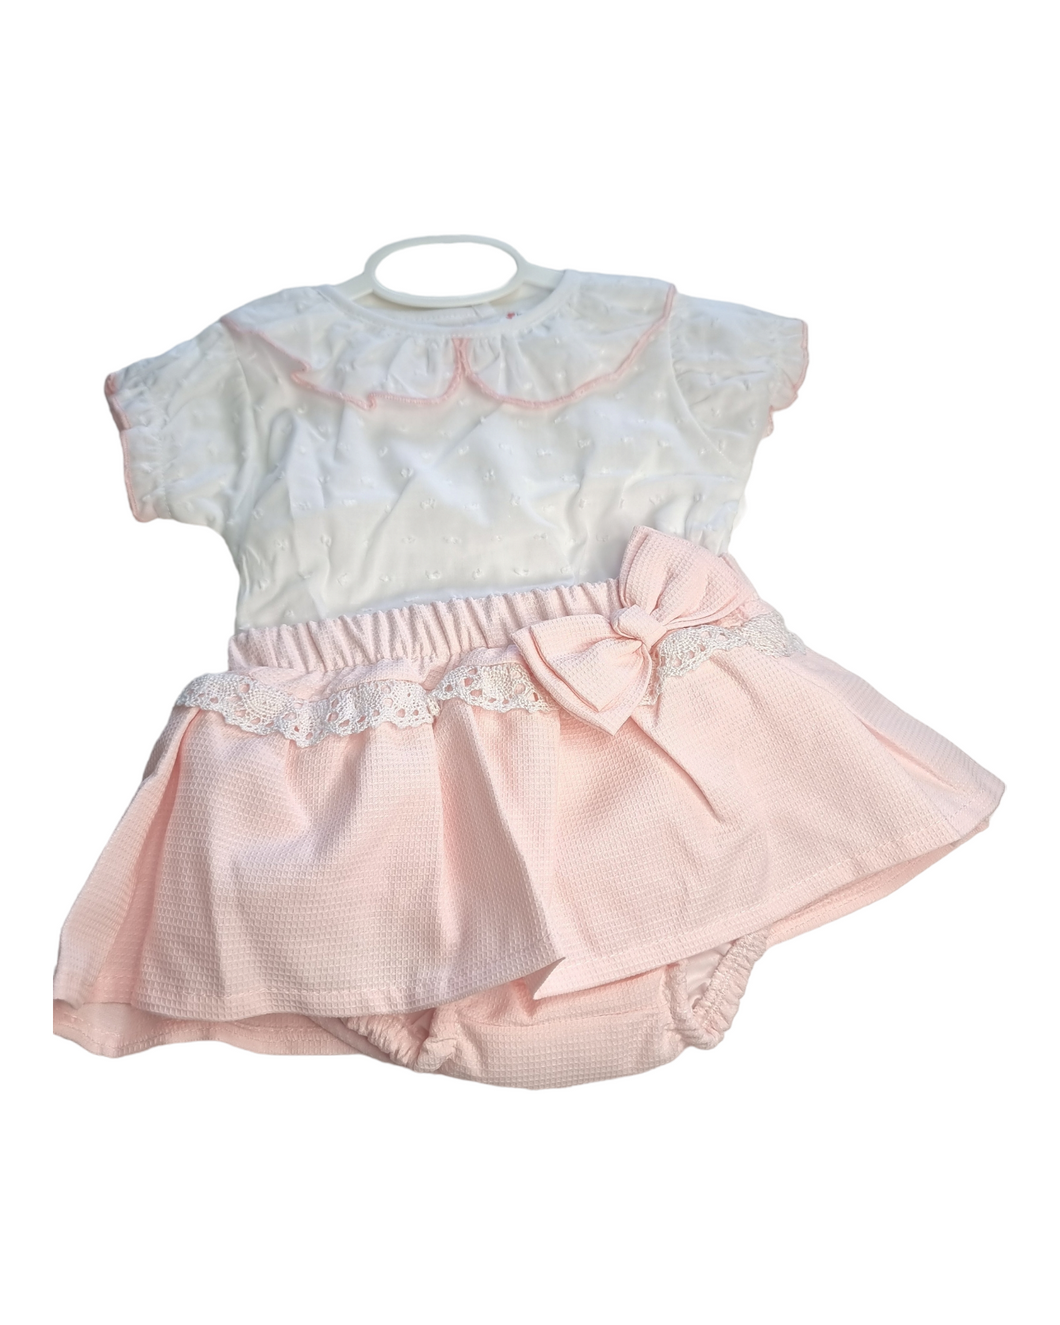 Maya Pink/white baby girls outfit